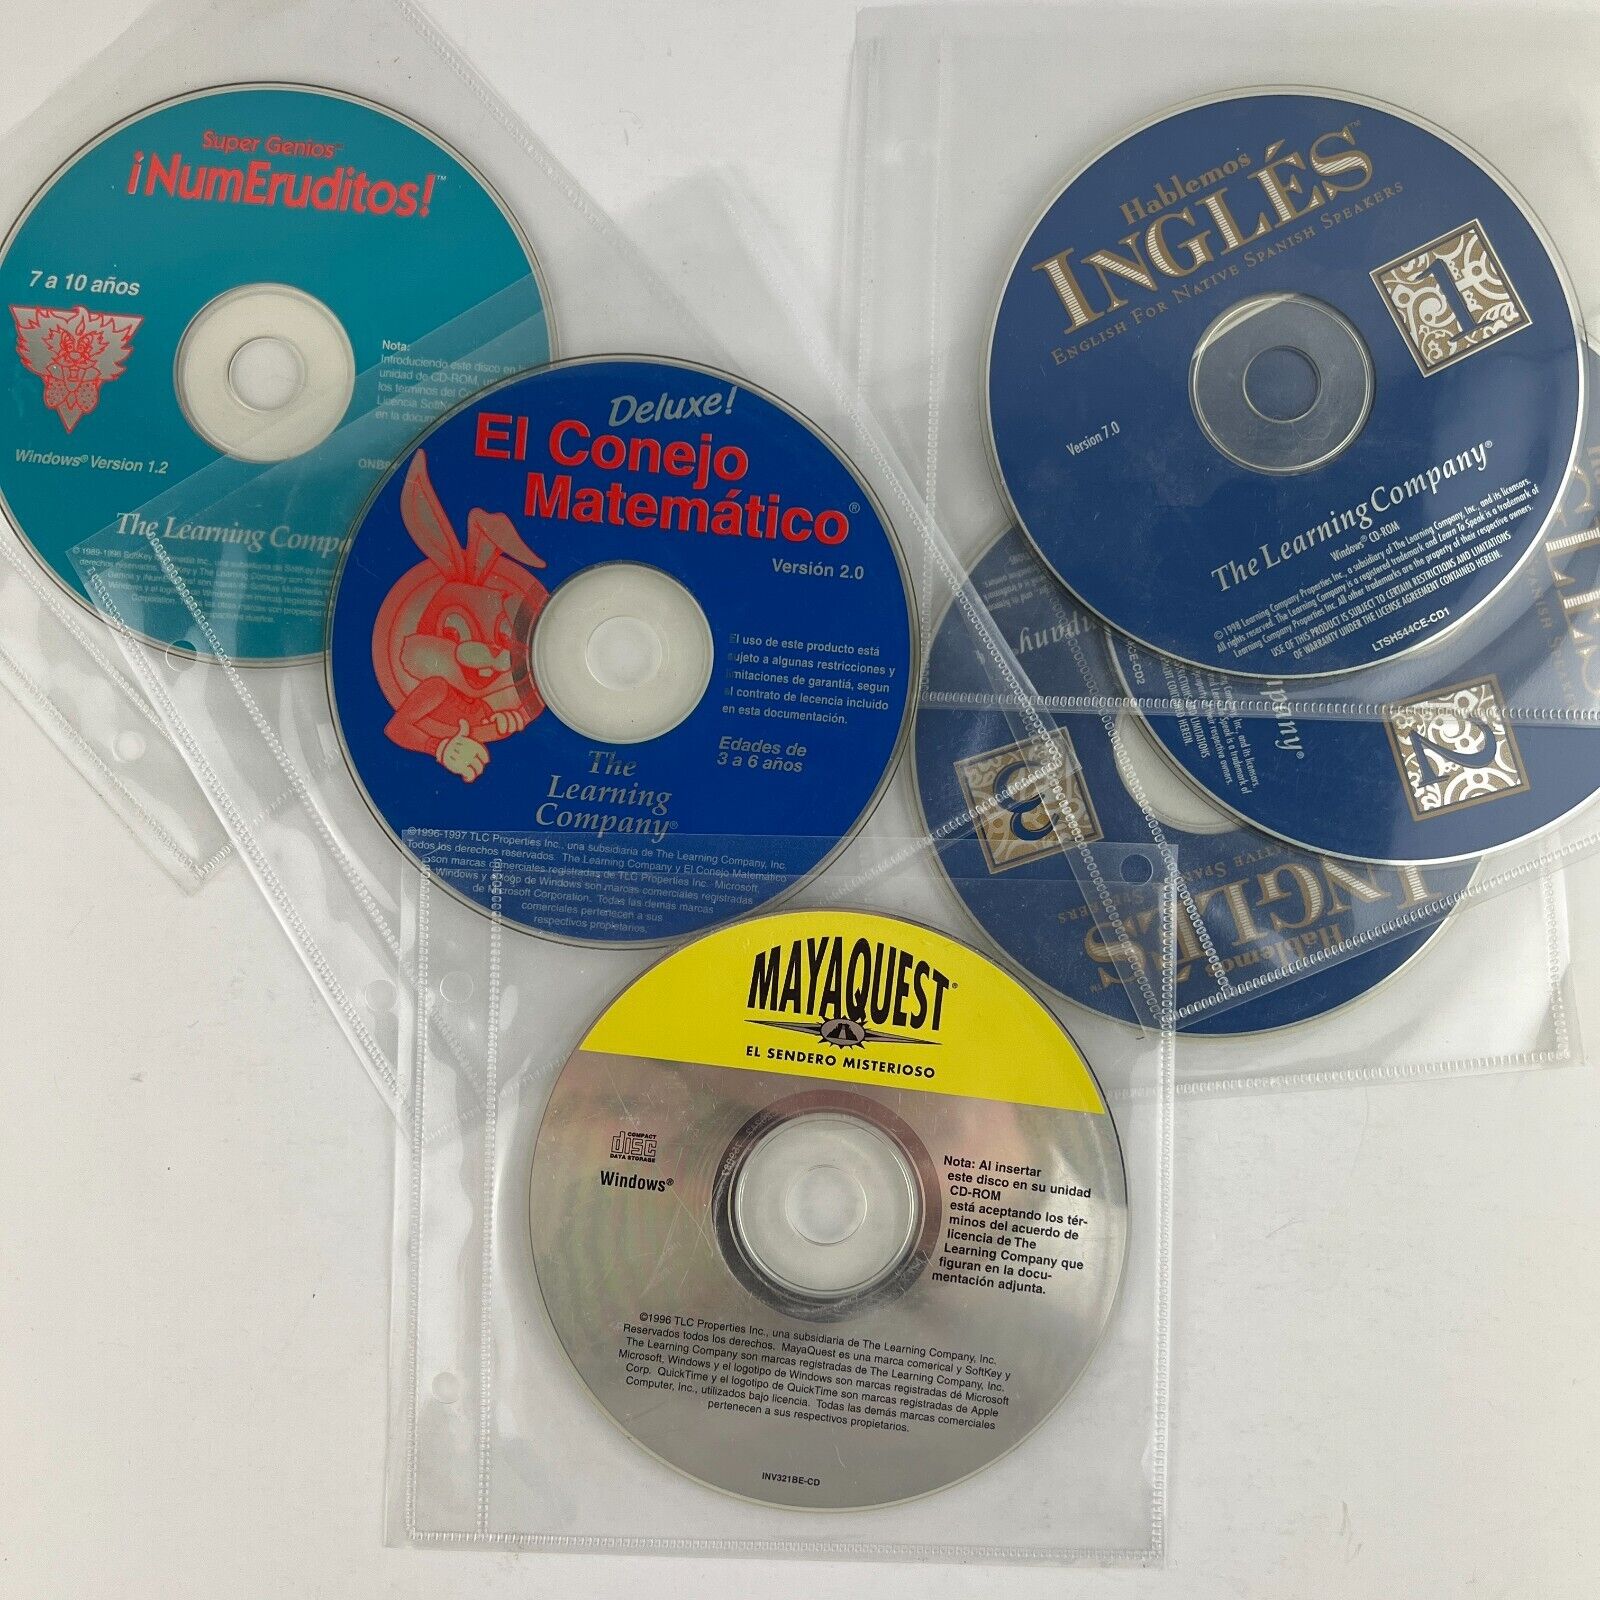 Spanish Windows PC CD-ROM Software (Ingles, Education, Games) Lot #1